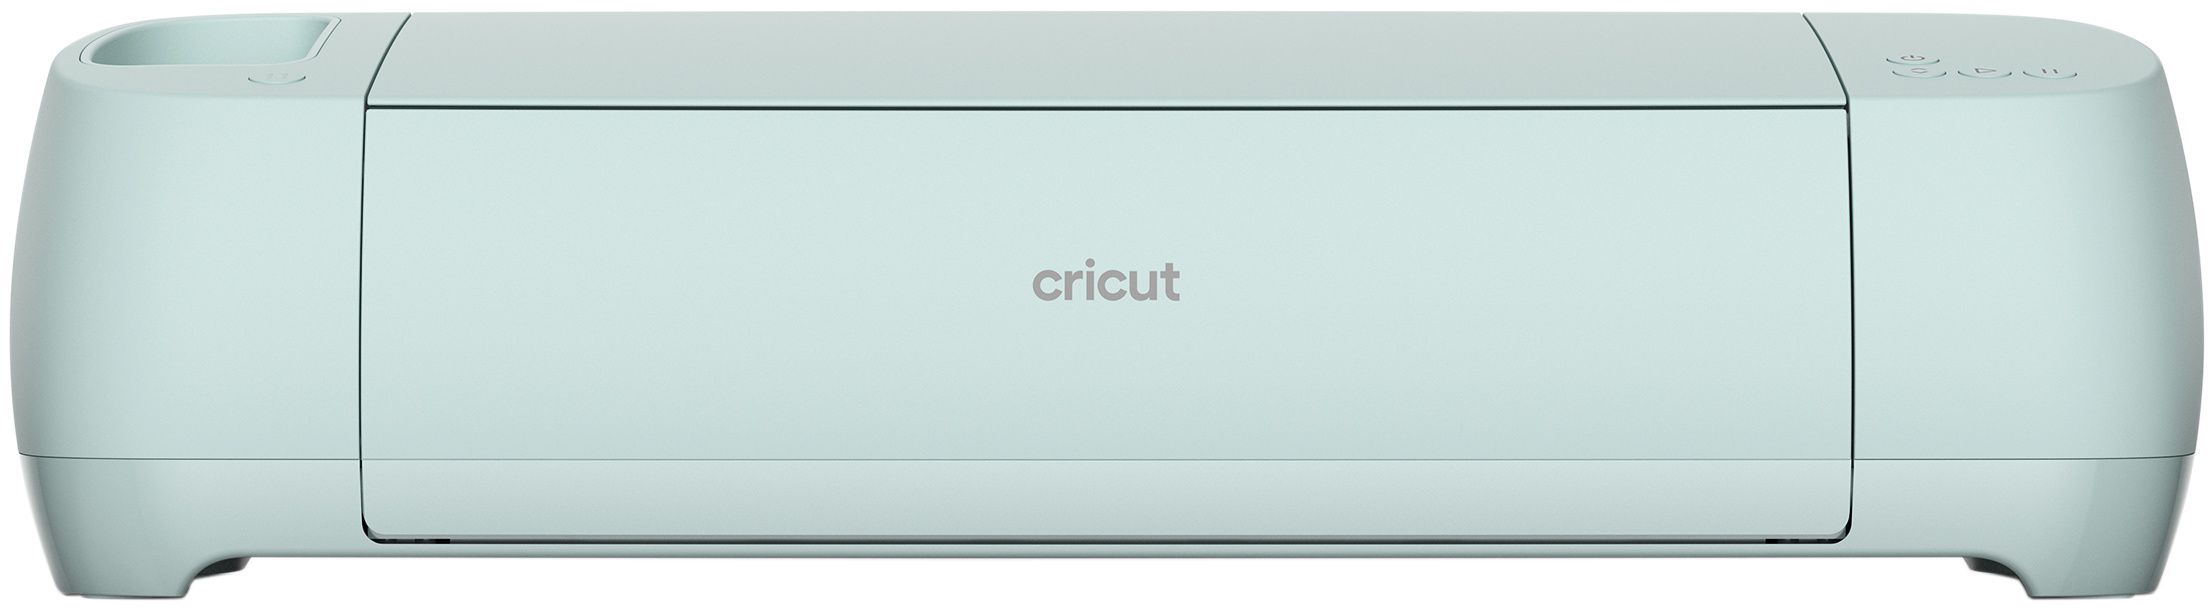 CRICUT SCORING STYLUS Brand NEW Sealed For Cricut Explore Machines